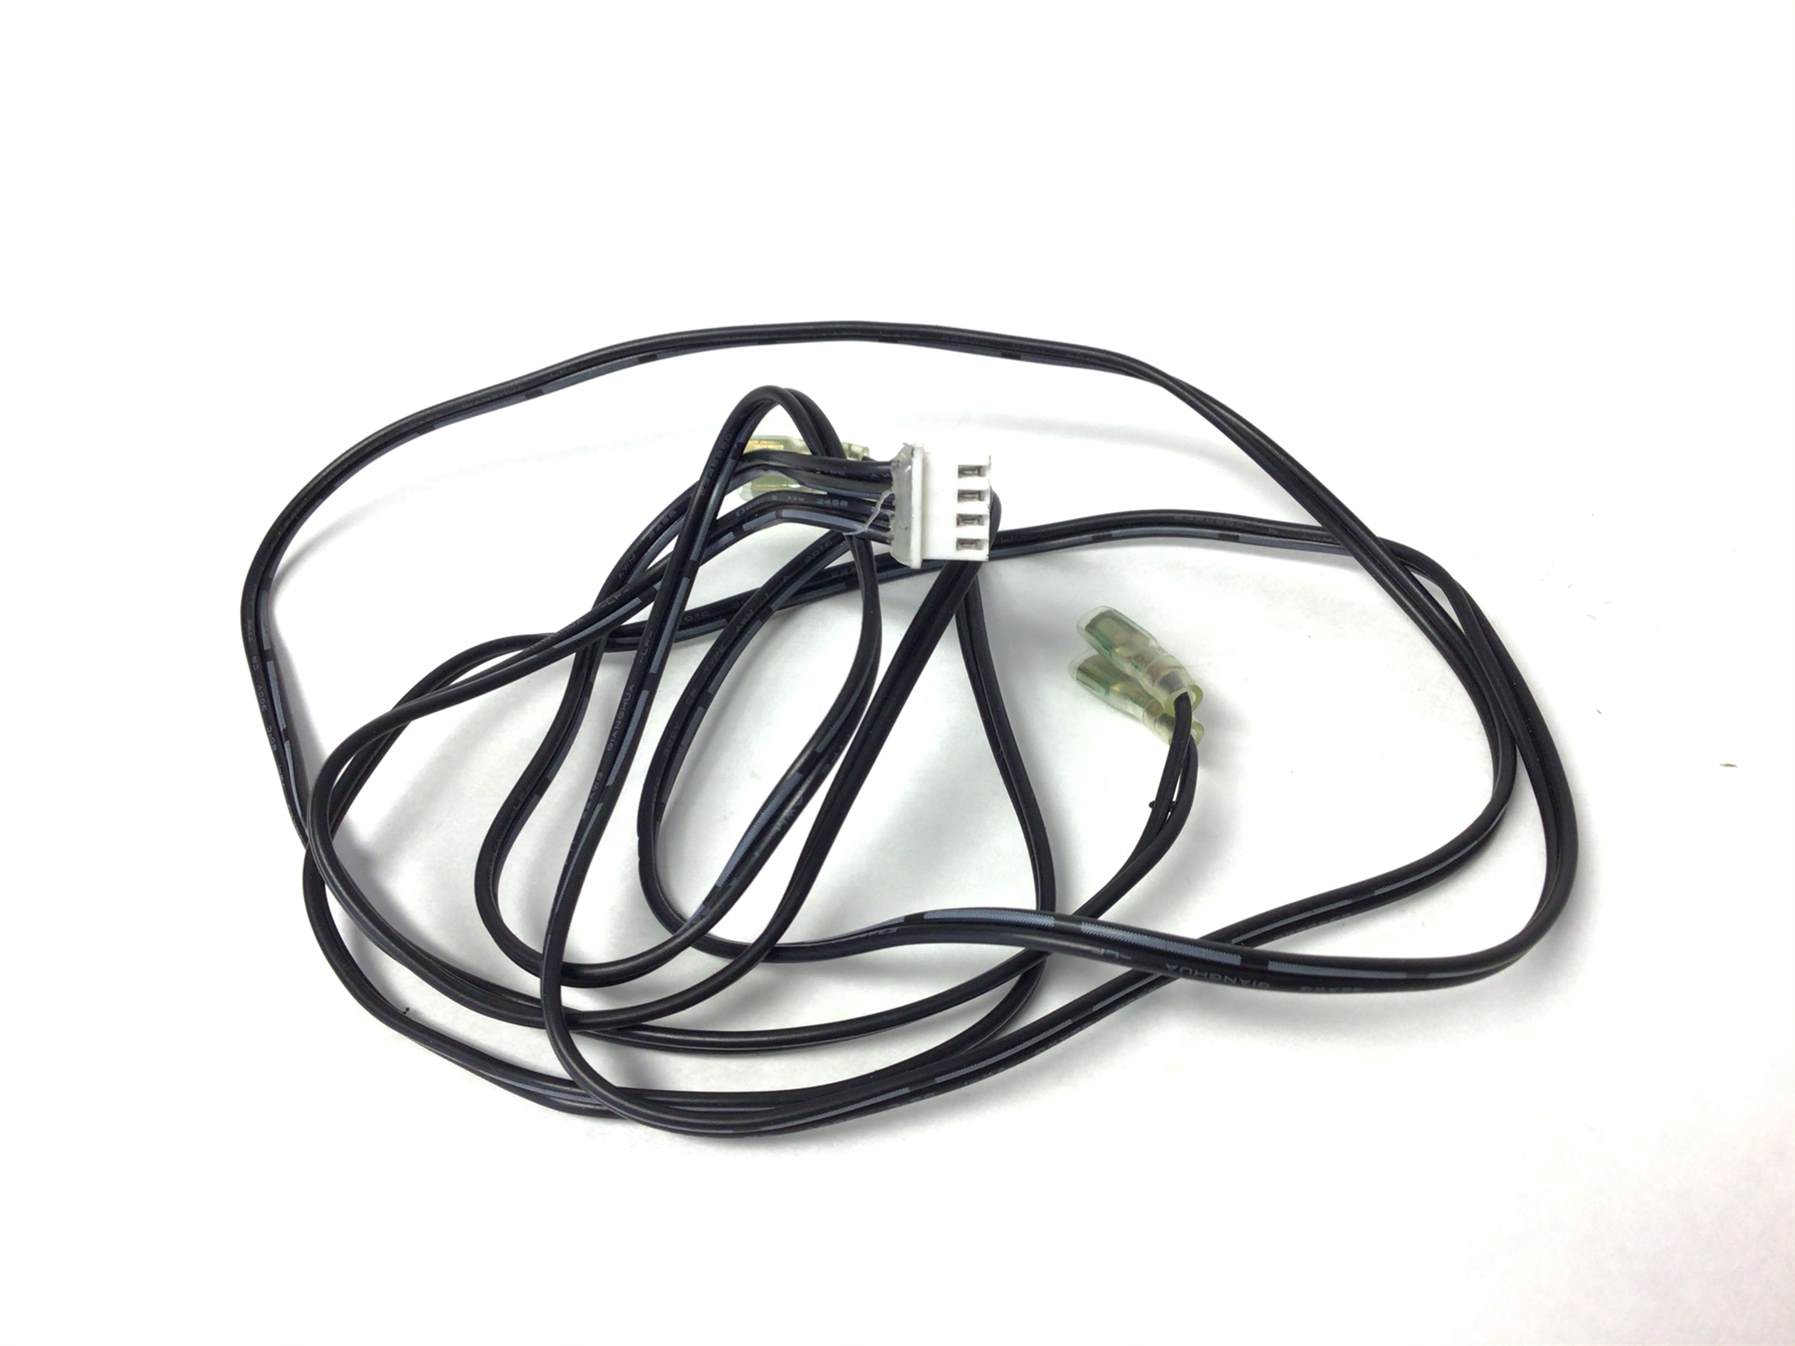 Hand Sensor Cable (Used)